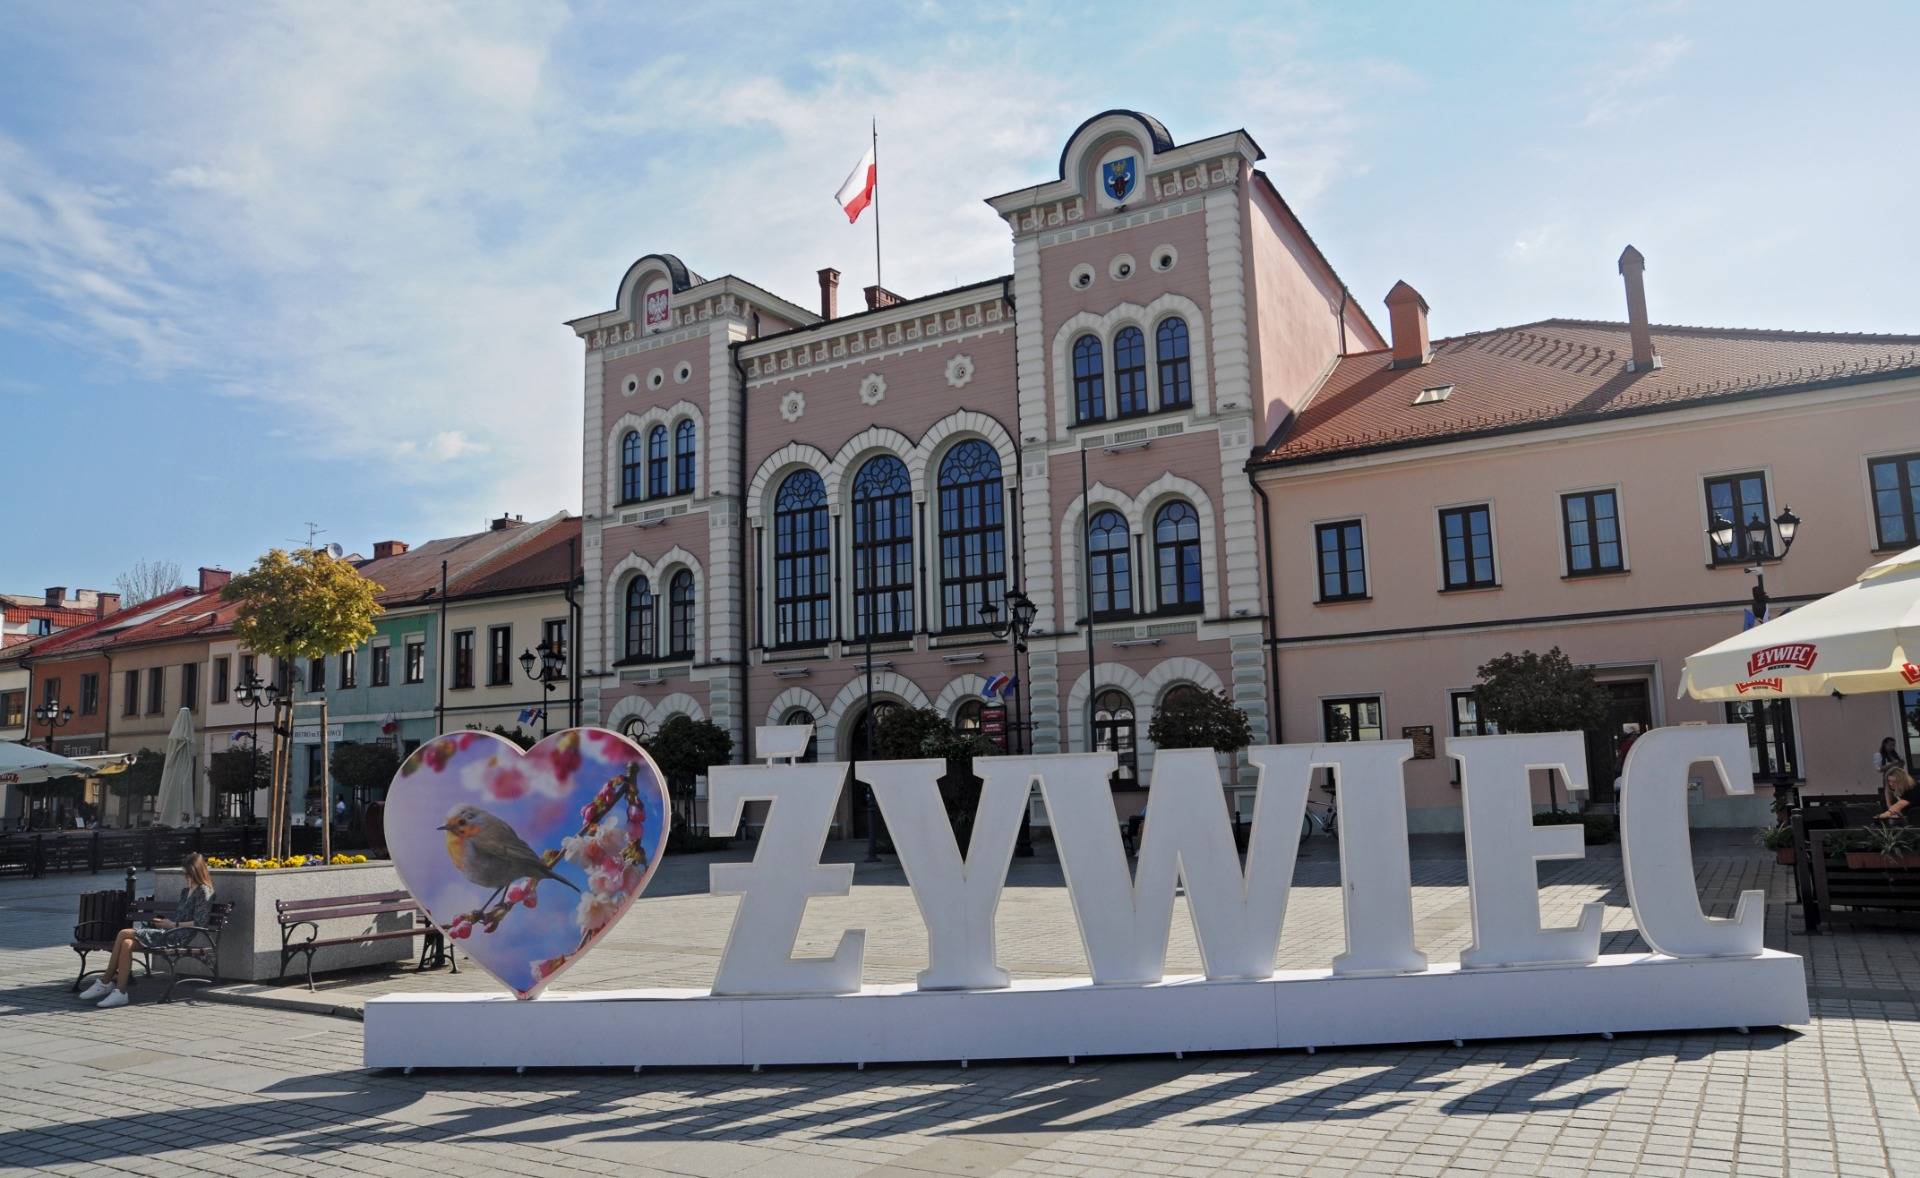 Żywiec - a town in Polish highlands